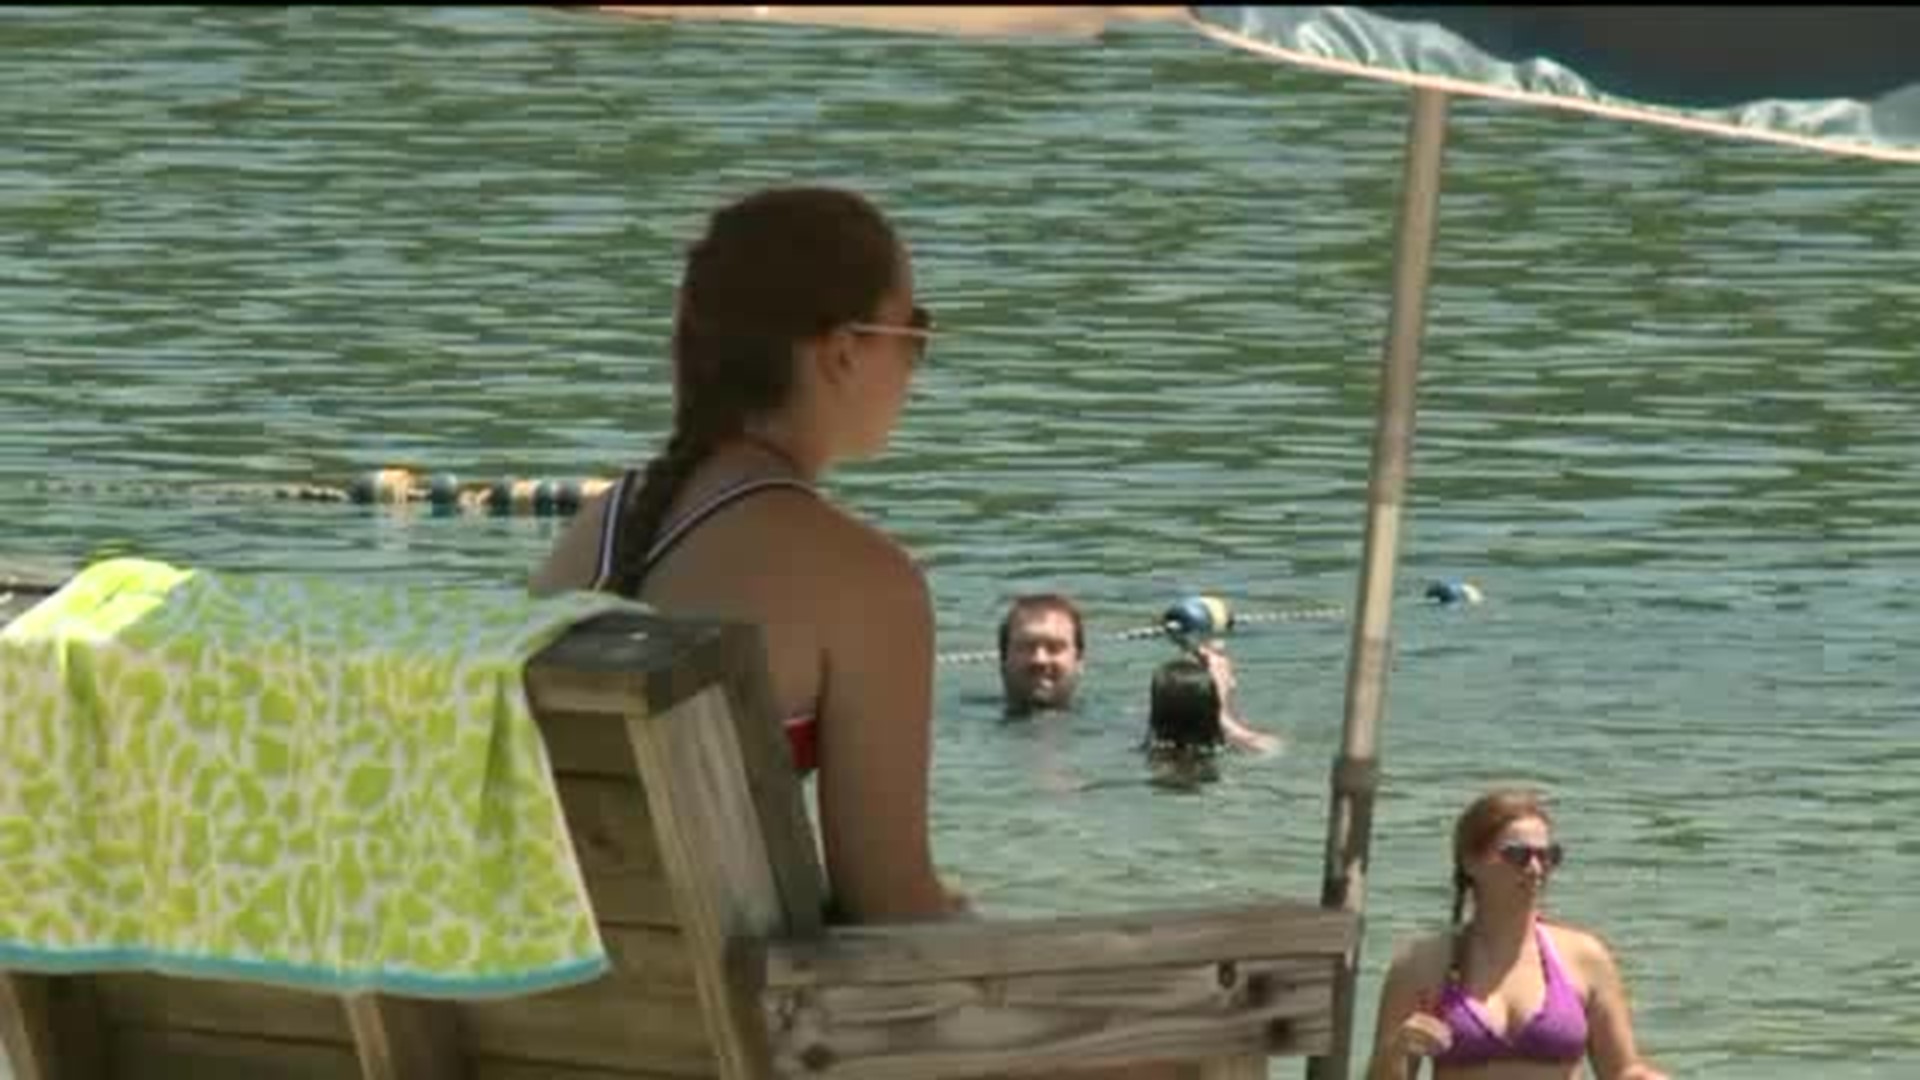 Lifeguards Needed at Mauch Chunk Lake